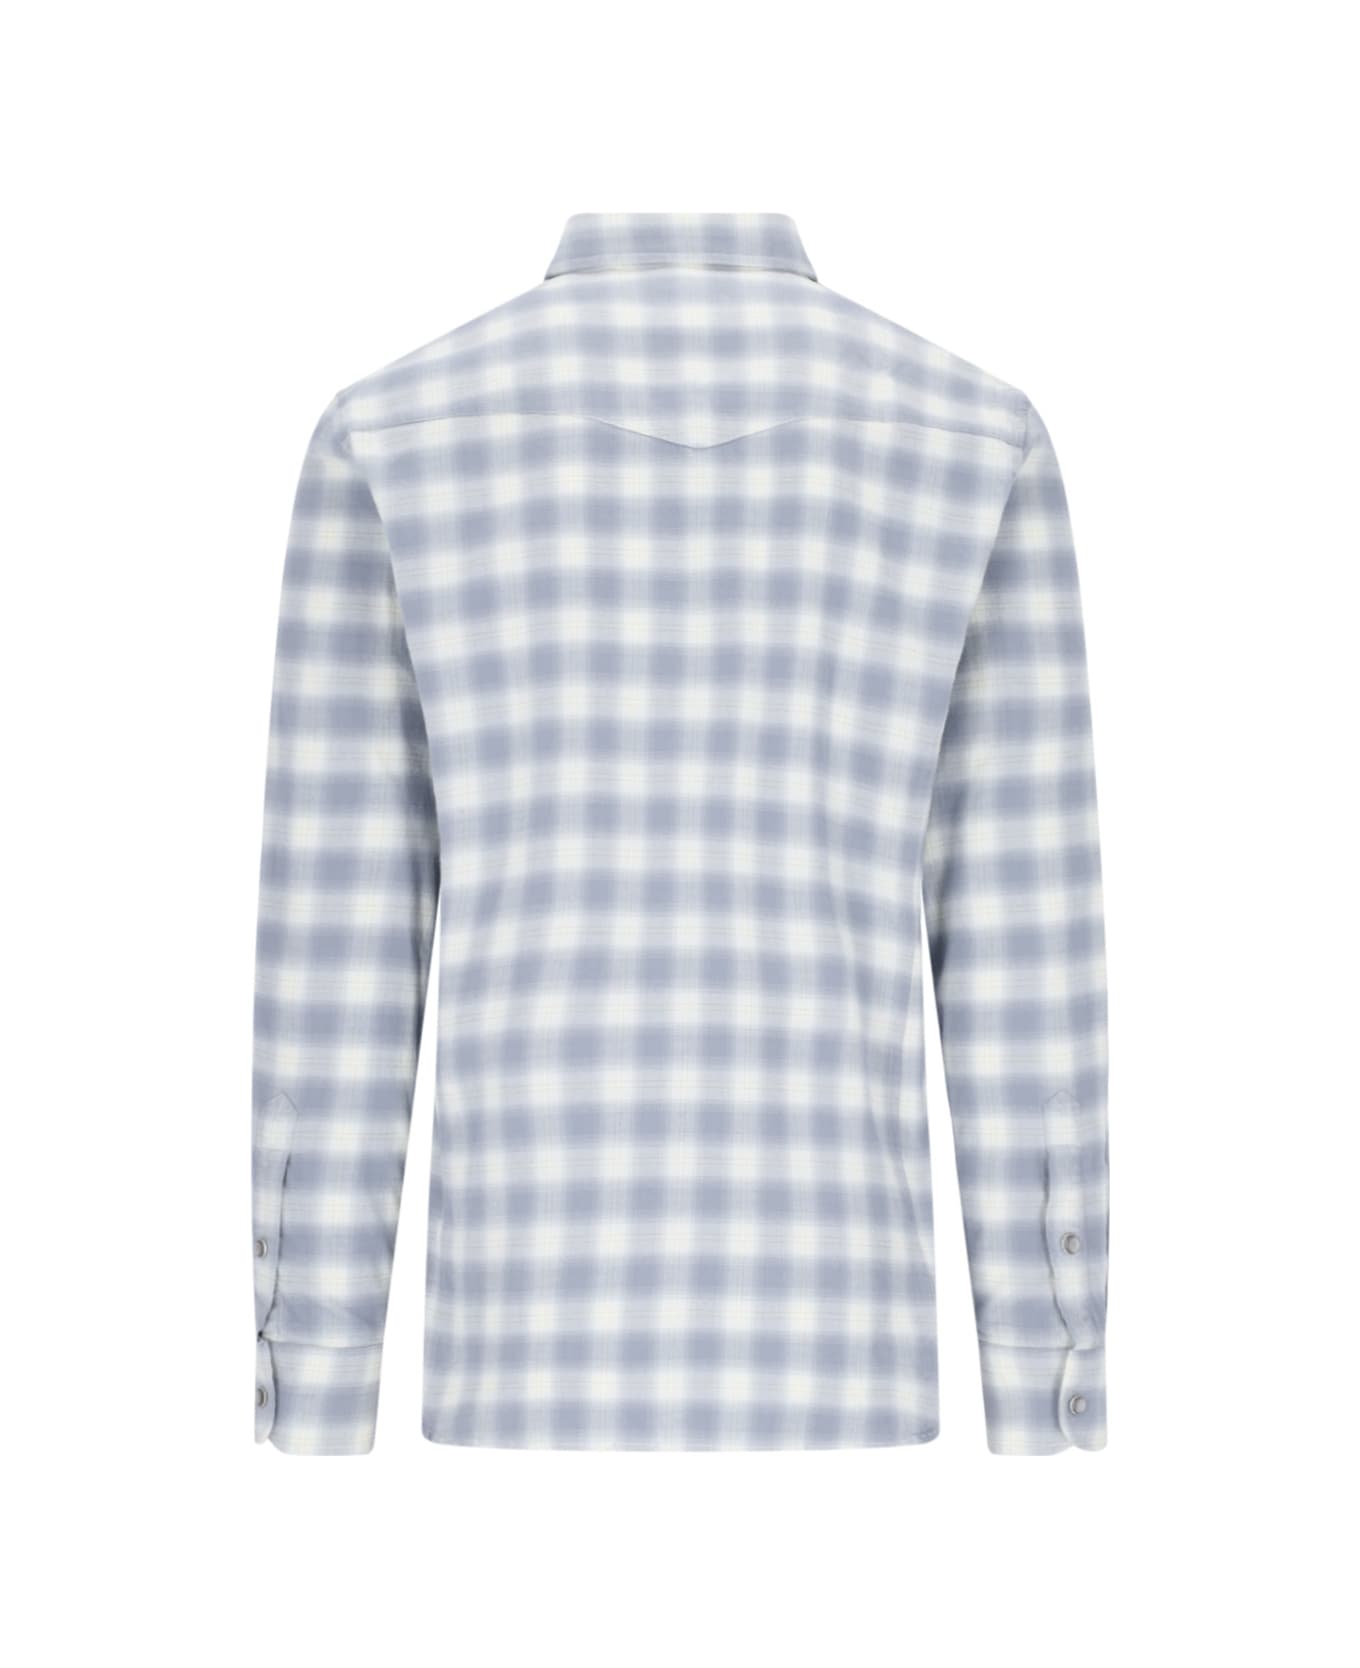 Tom Ford Shirt - Grey シャツ